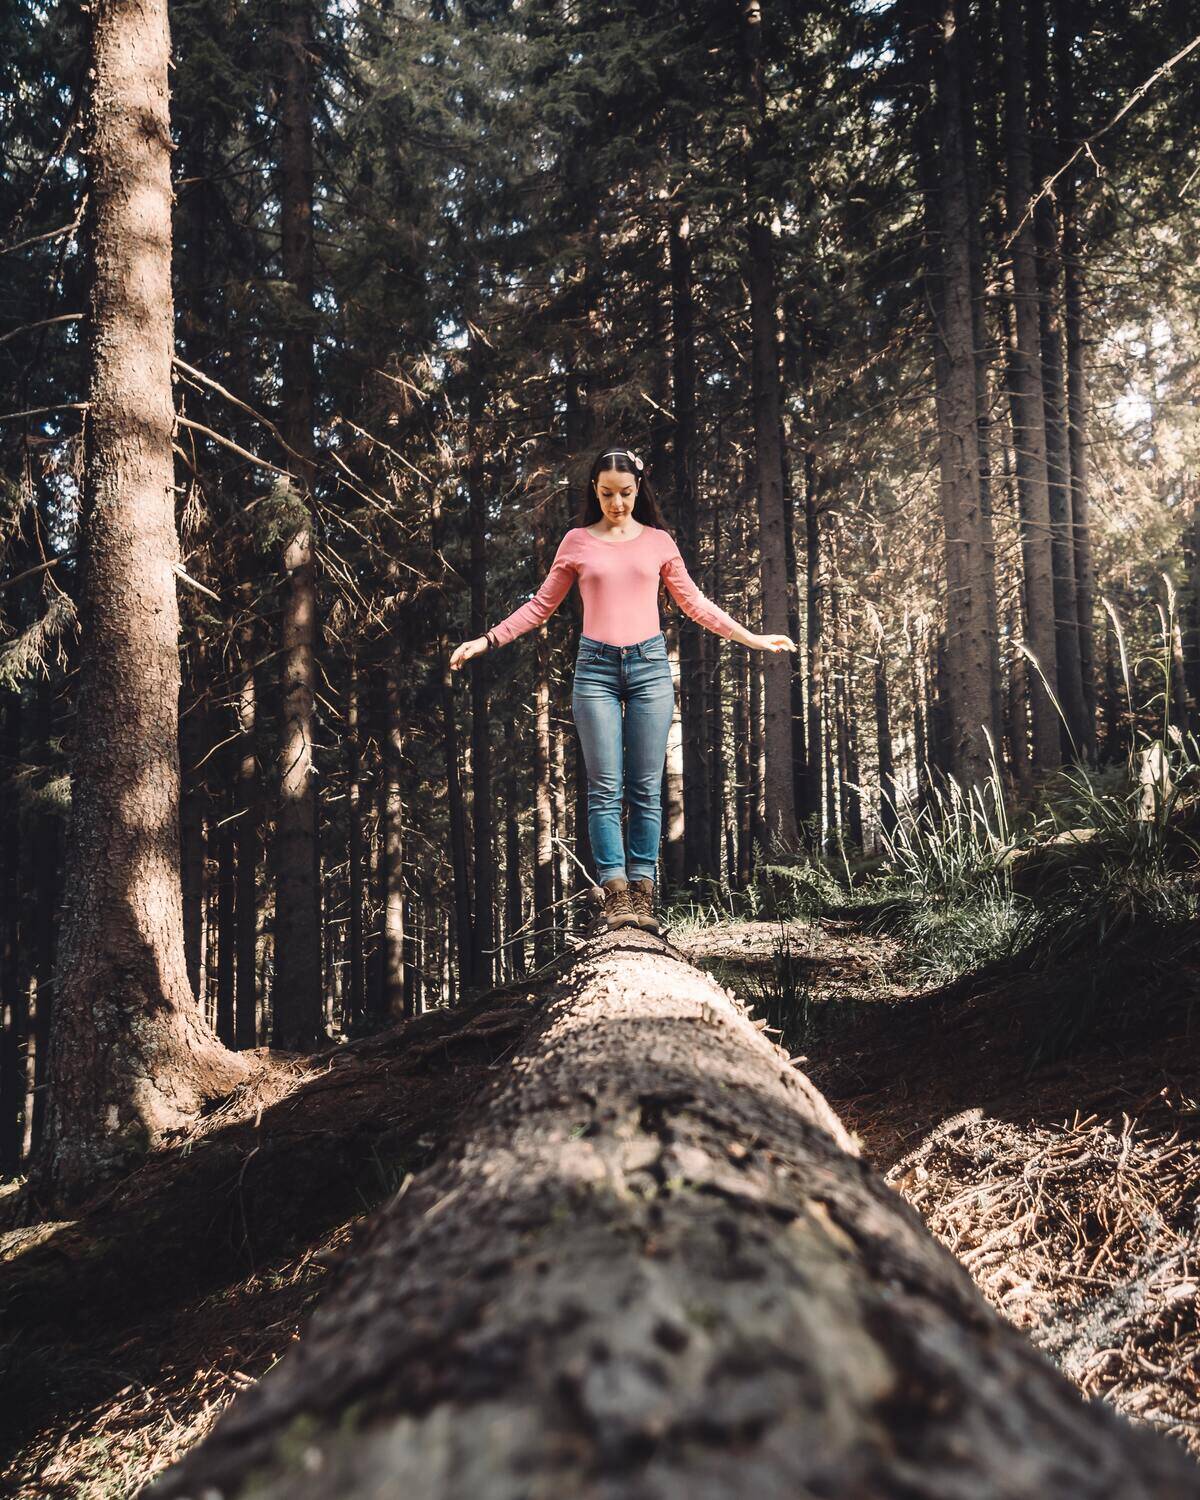 A woman walking along the trunk of a fallen tree in a forest.